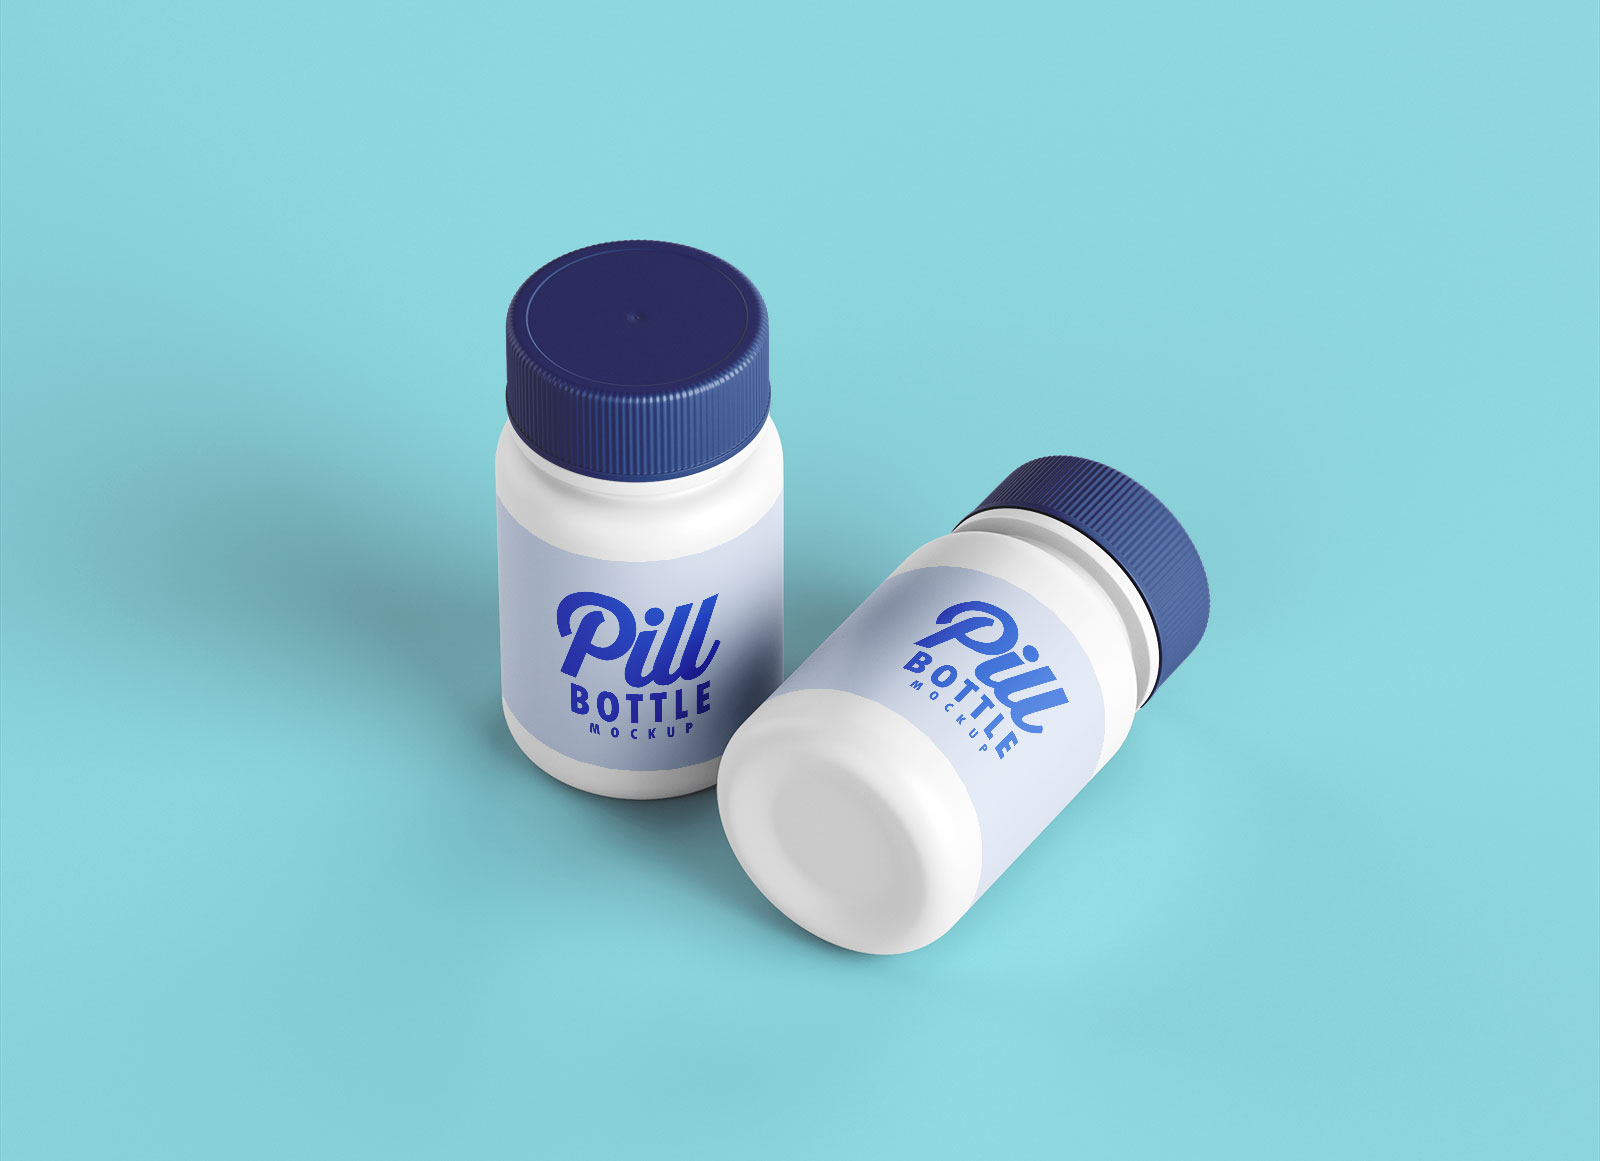 Free-Medicine-Pill-Bottle-Mockup-PSD-Set-3